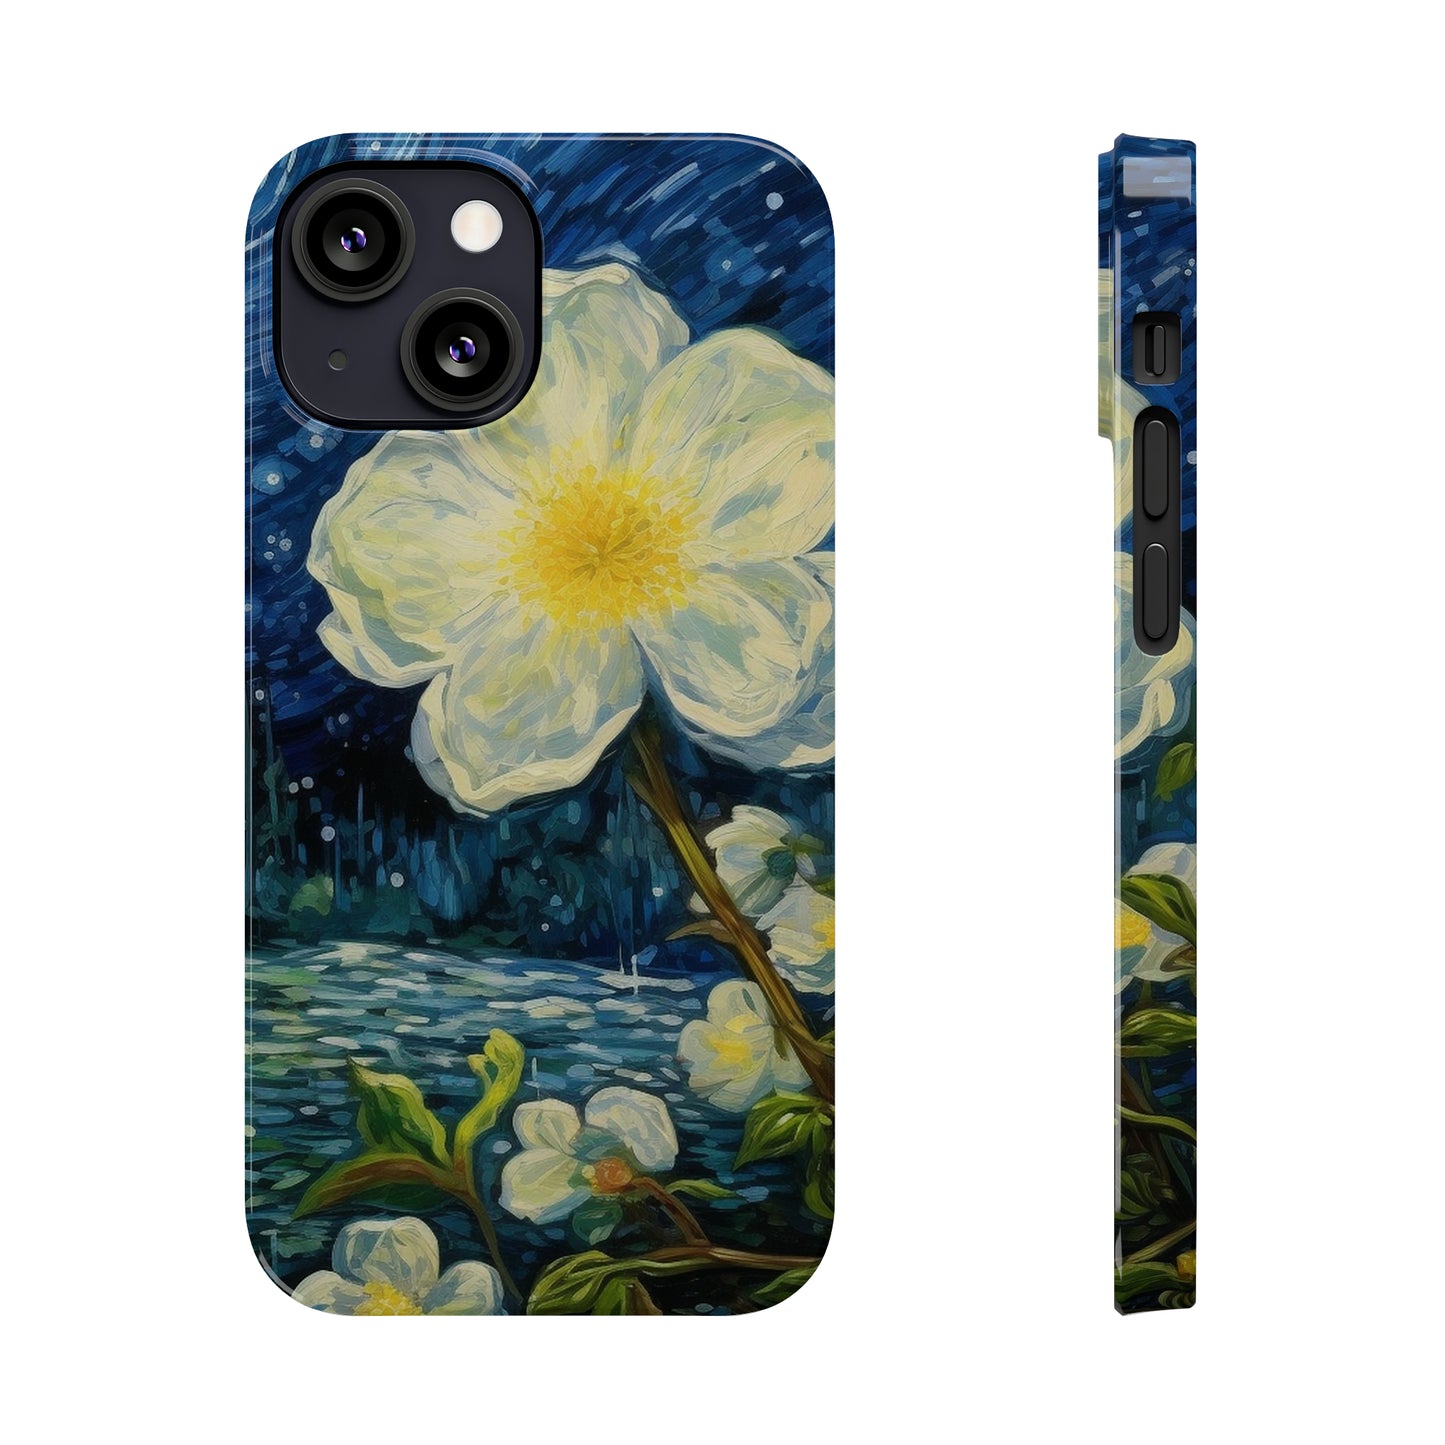 Van Gogh flower garden iPhone case